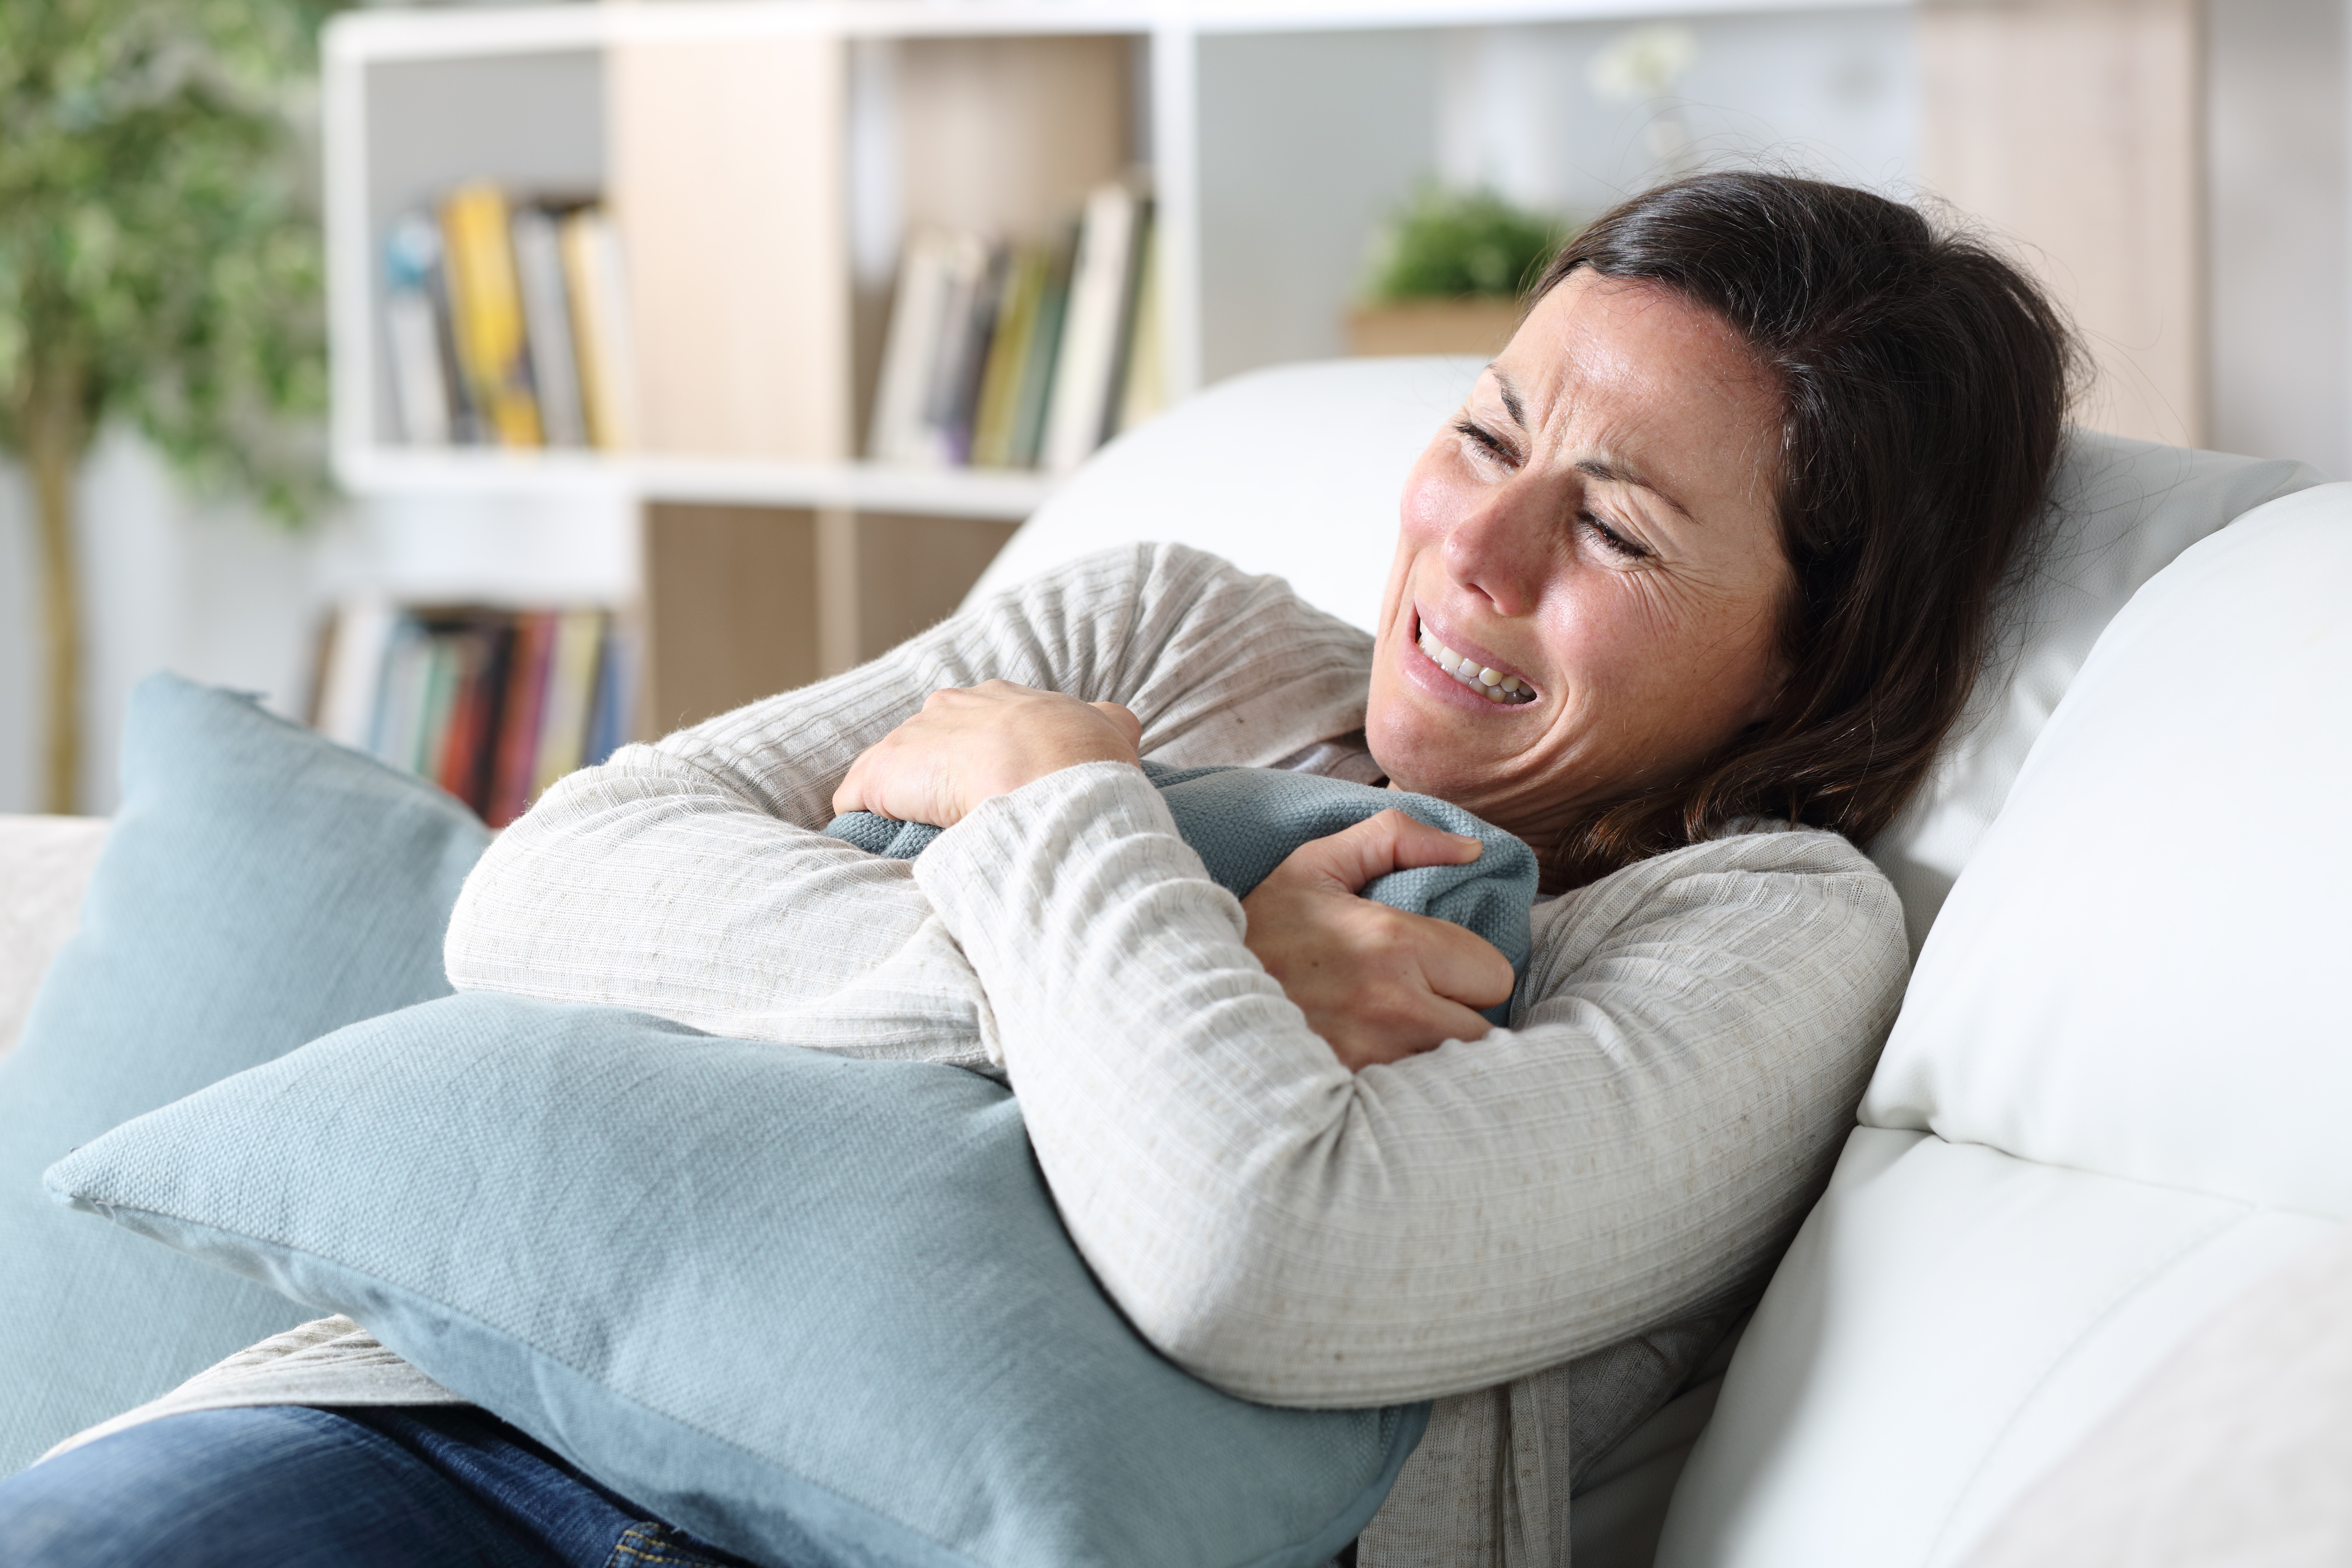 Mujer triste llora en casa | Fuente: Shutterstock.com